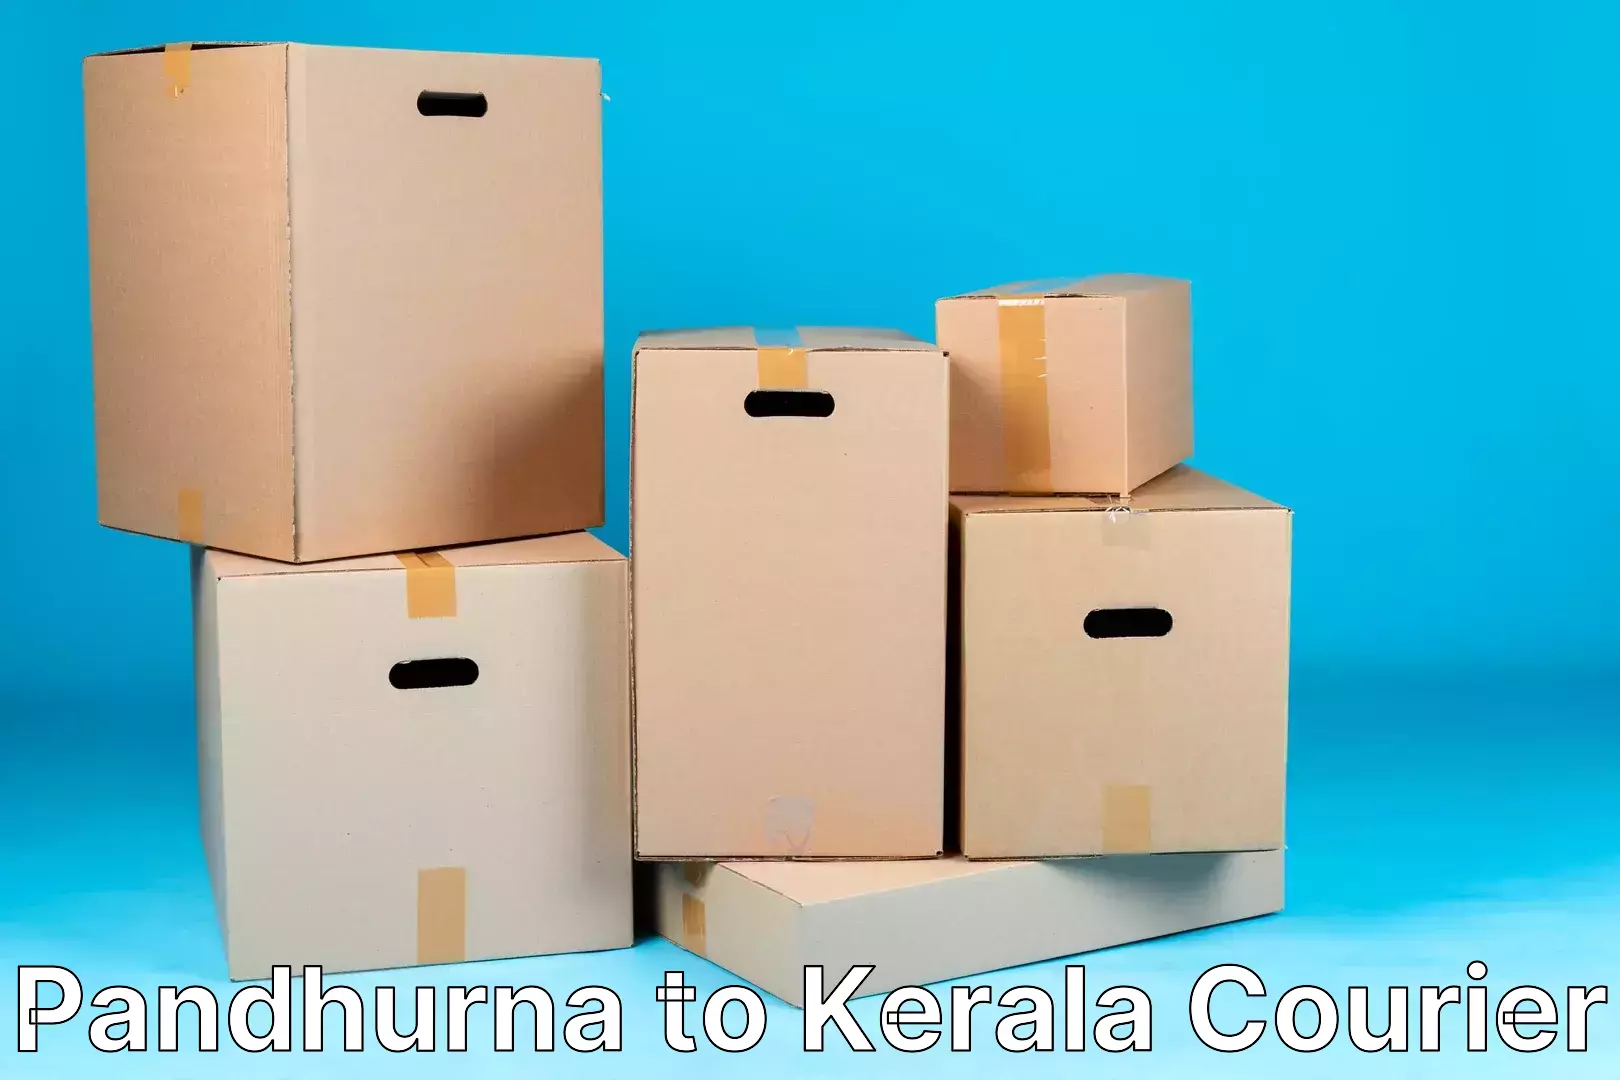 Tech-enabled shipping in Pandhurna to Kerala